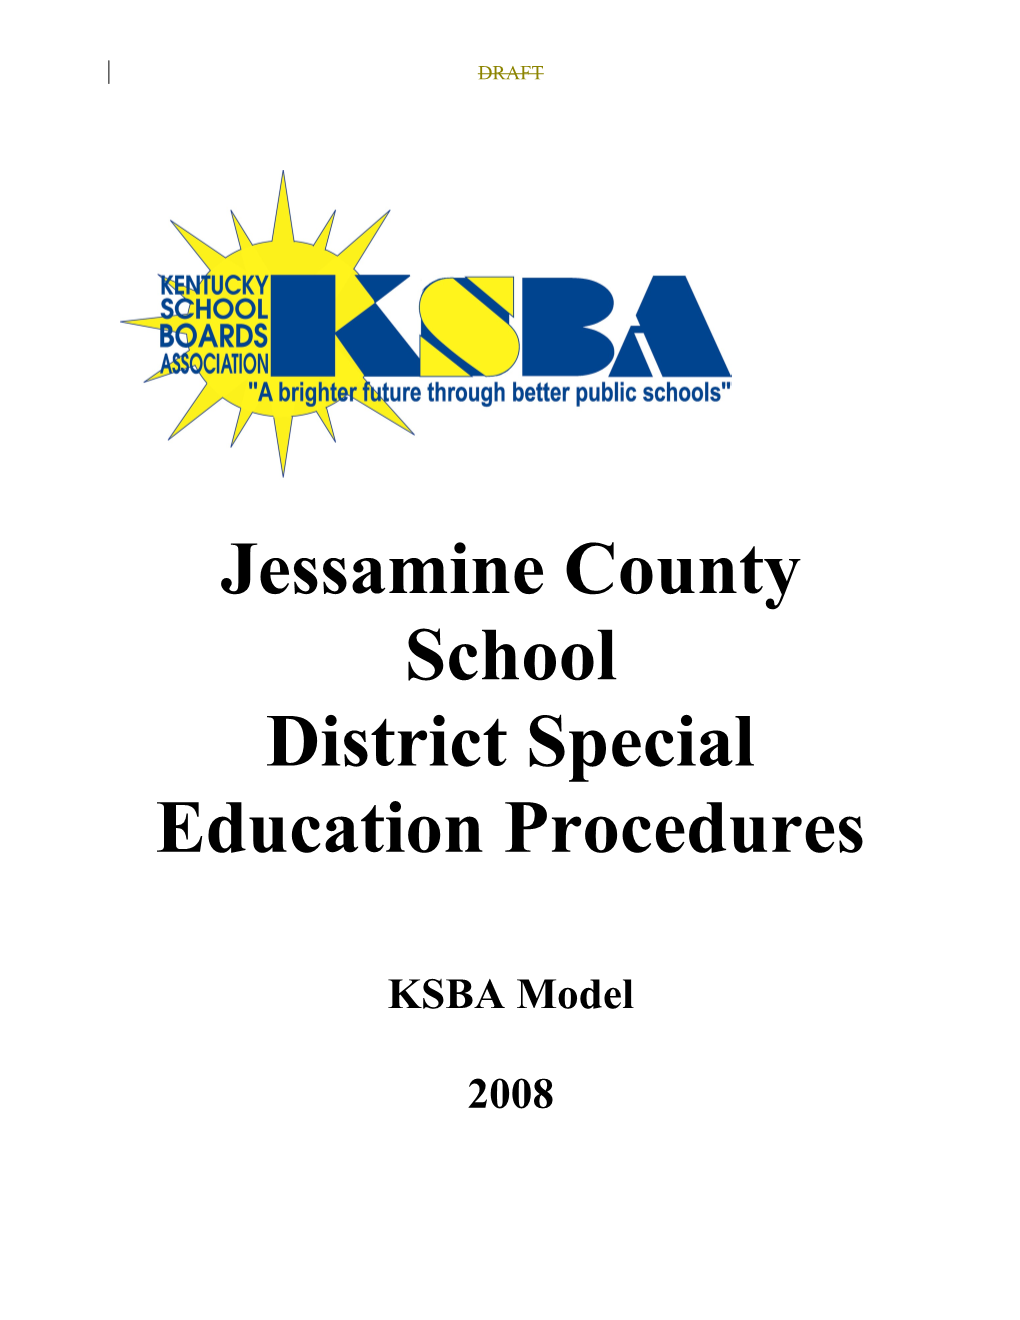 District Special Education Procedures